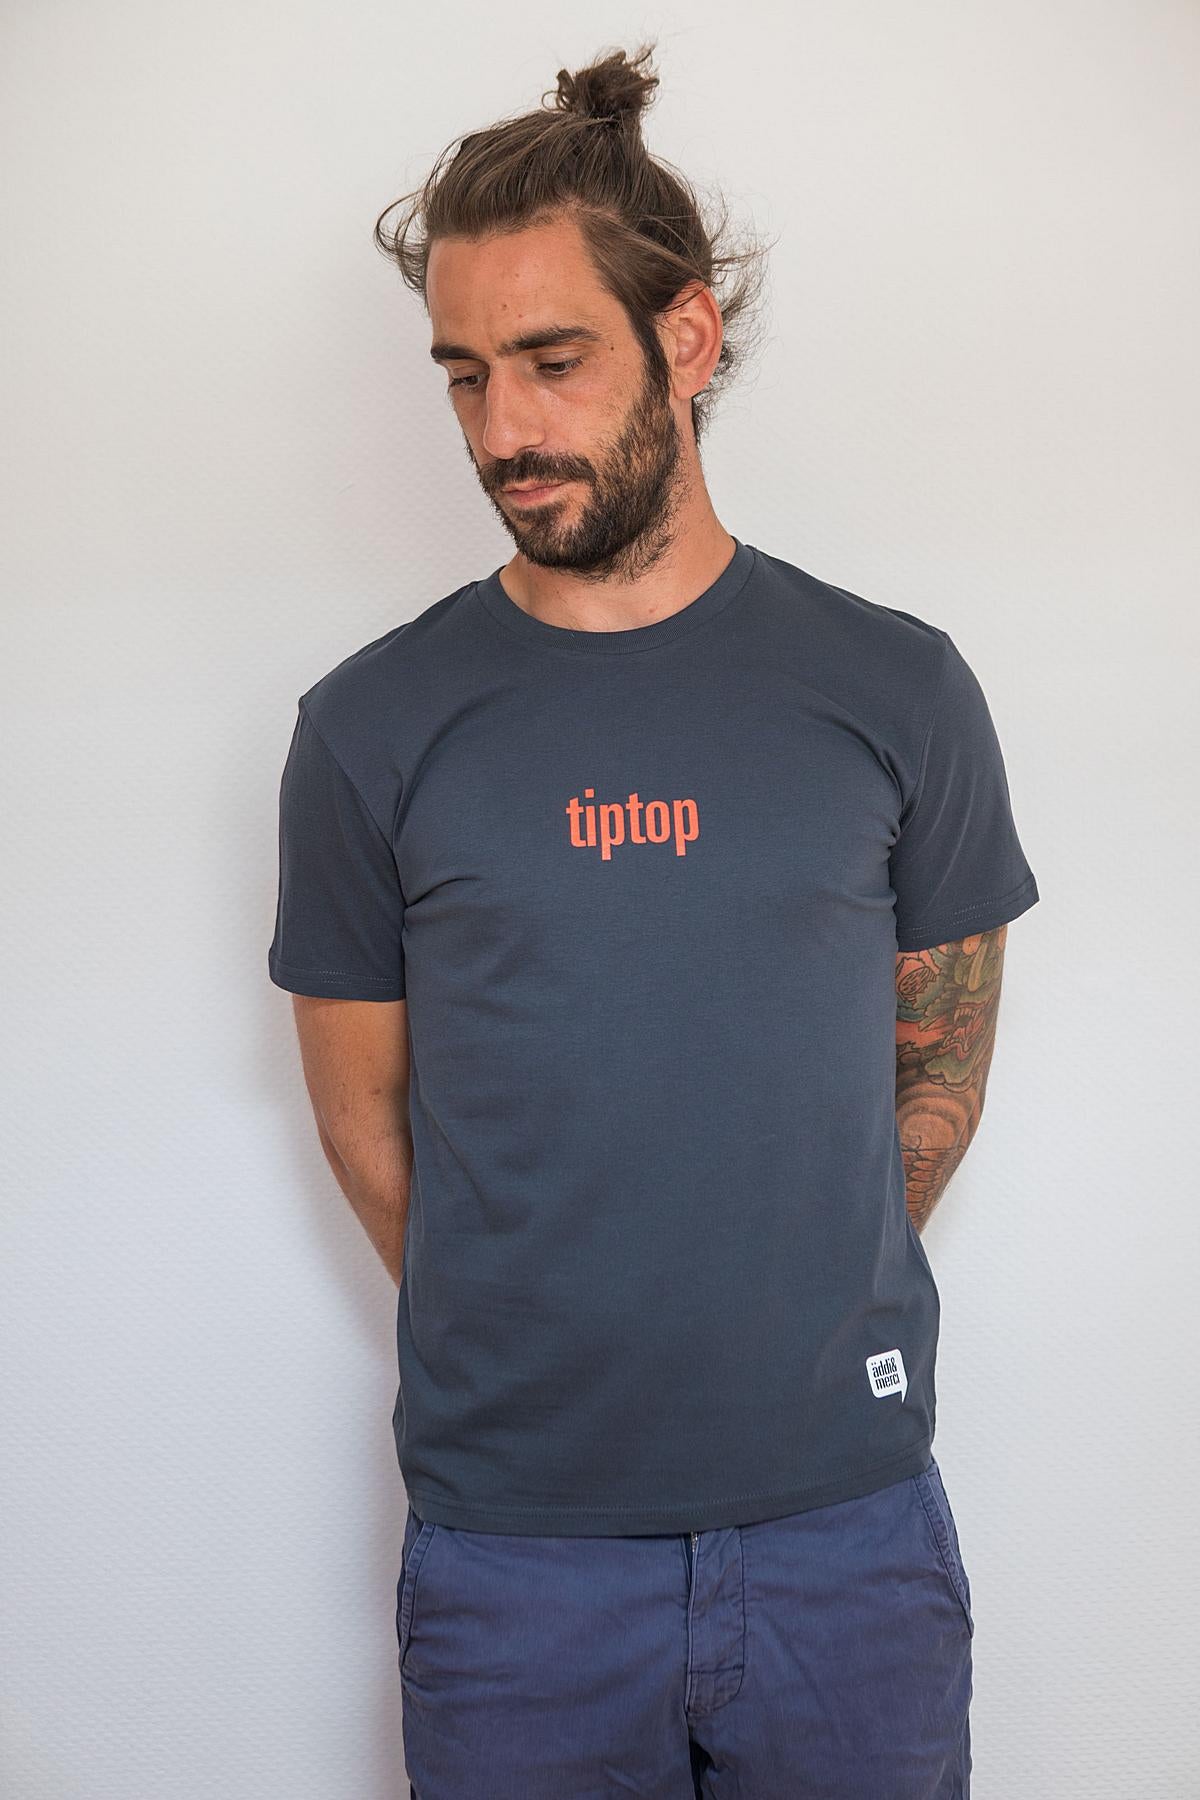 UNISEX T-SHIRT „tiptop“: Shirt colour „Indian ink grey“, Print „Red“